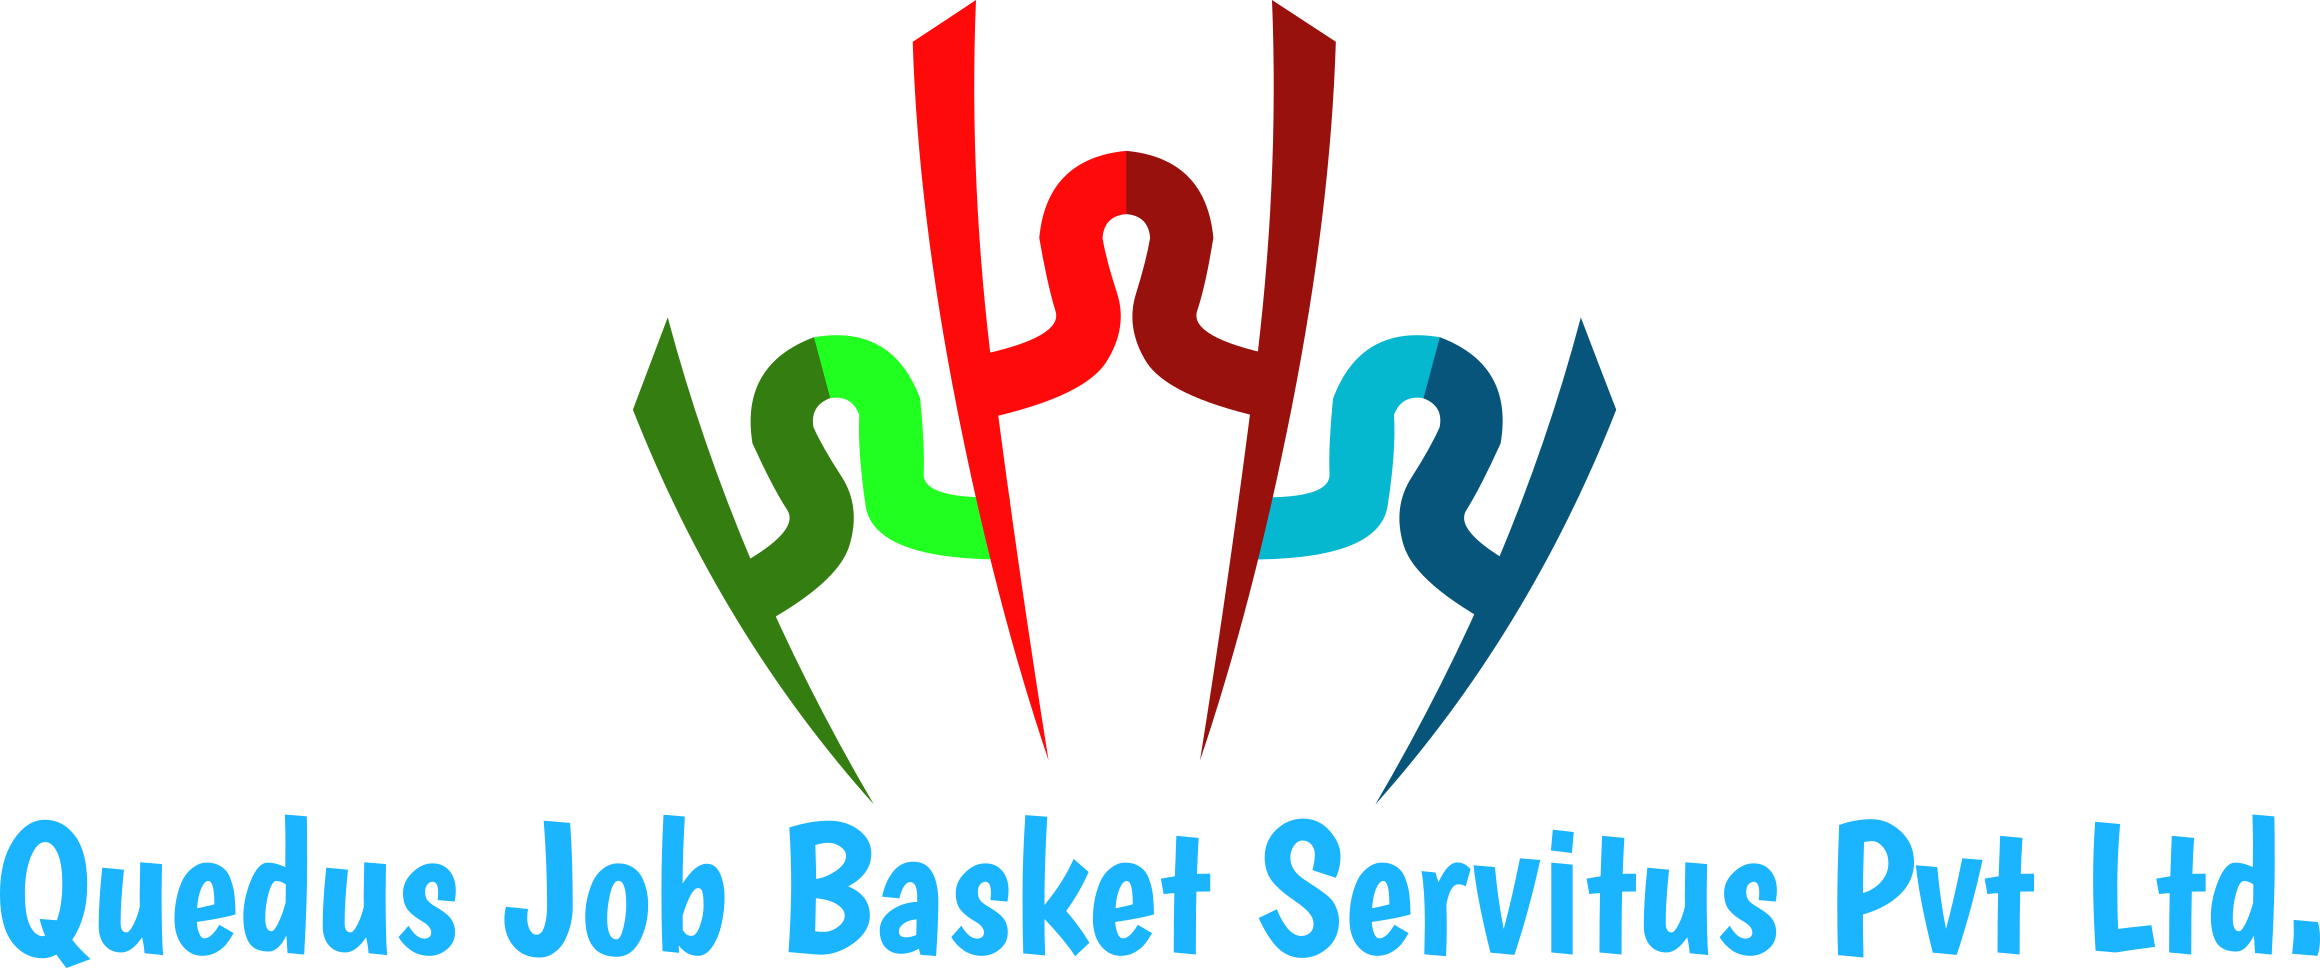 Job Basket